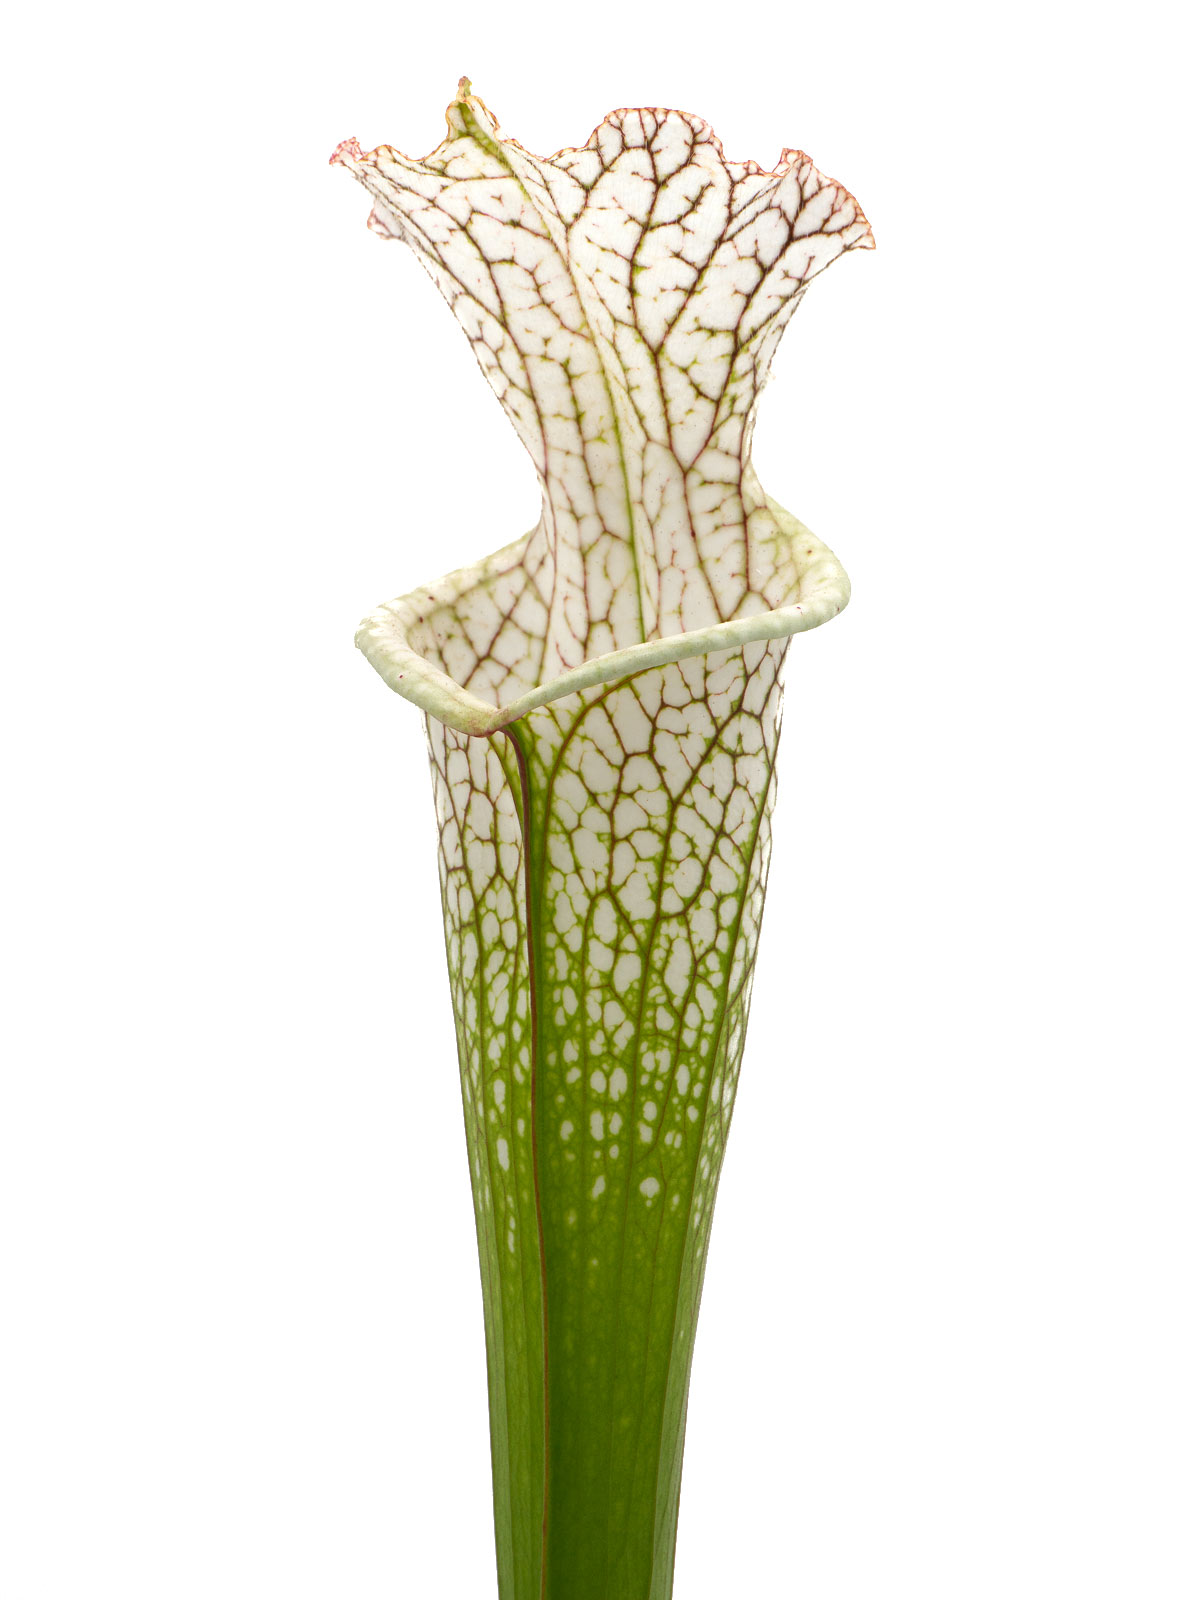 Sarracenia leucophylla - MK L85 Tibbee, Washington County, Alabama